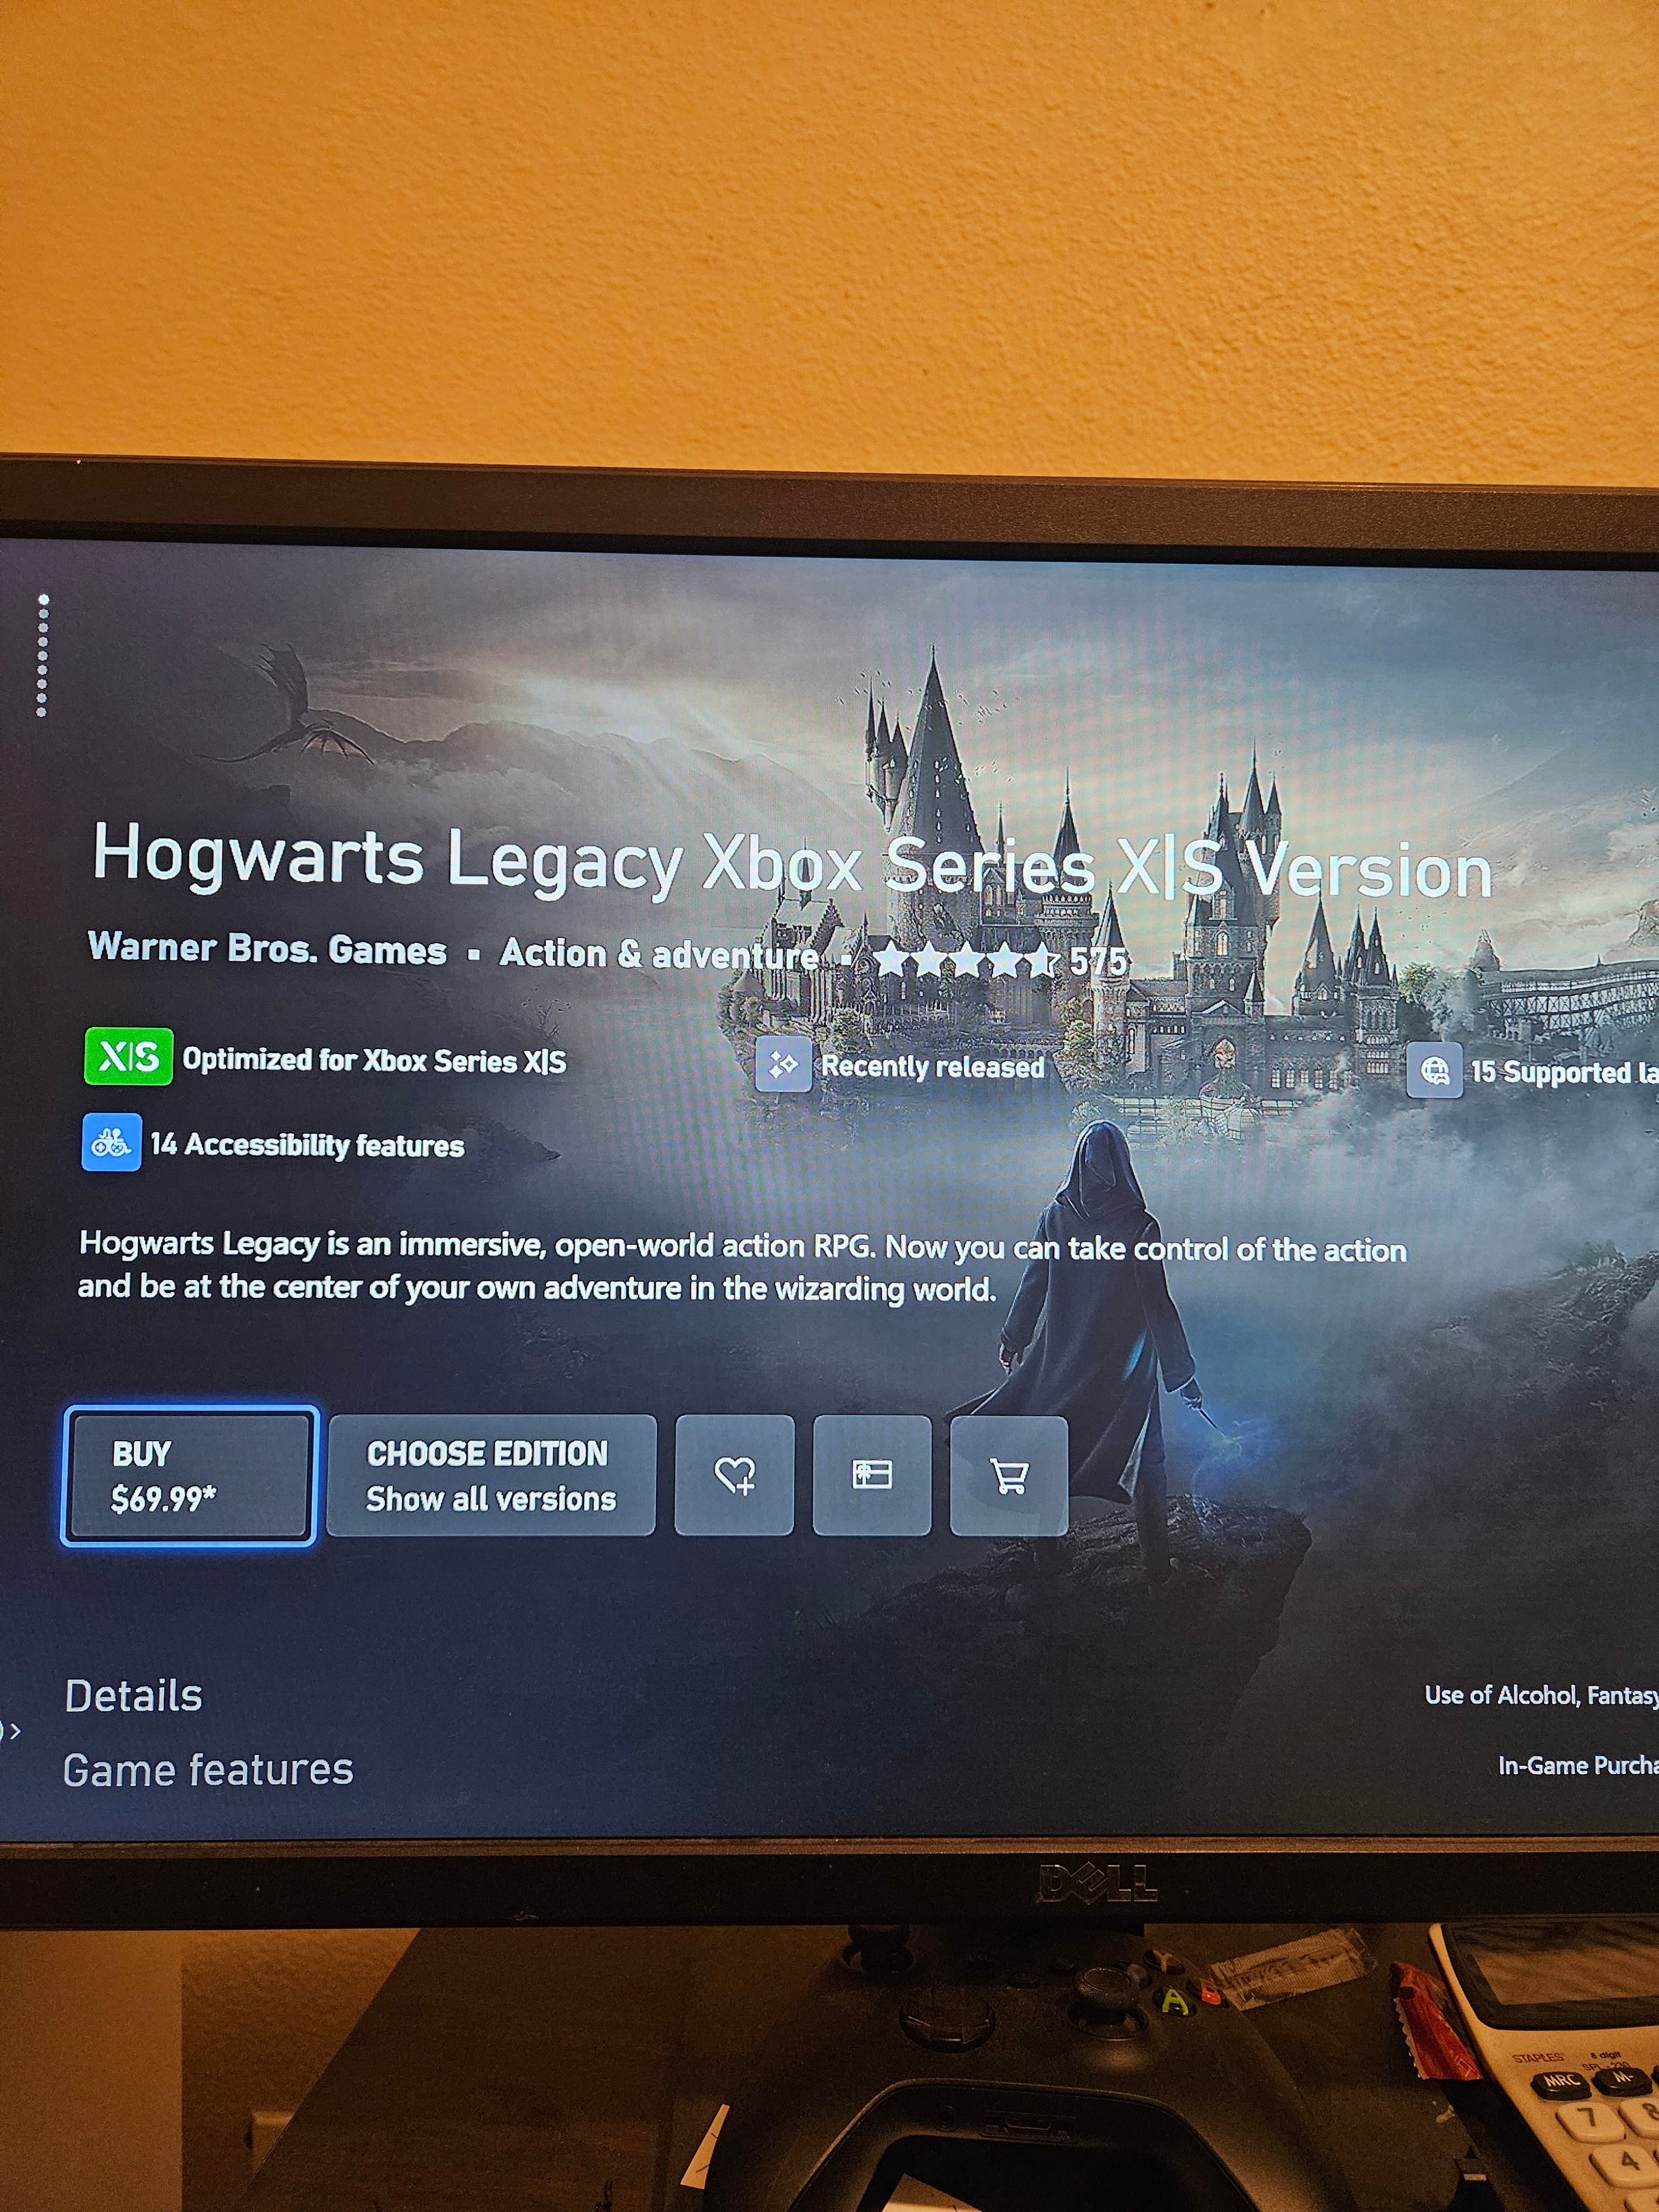 Buy Hogwarts Legacy: Digital Deluxe Edition